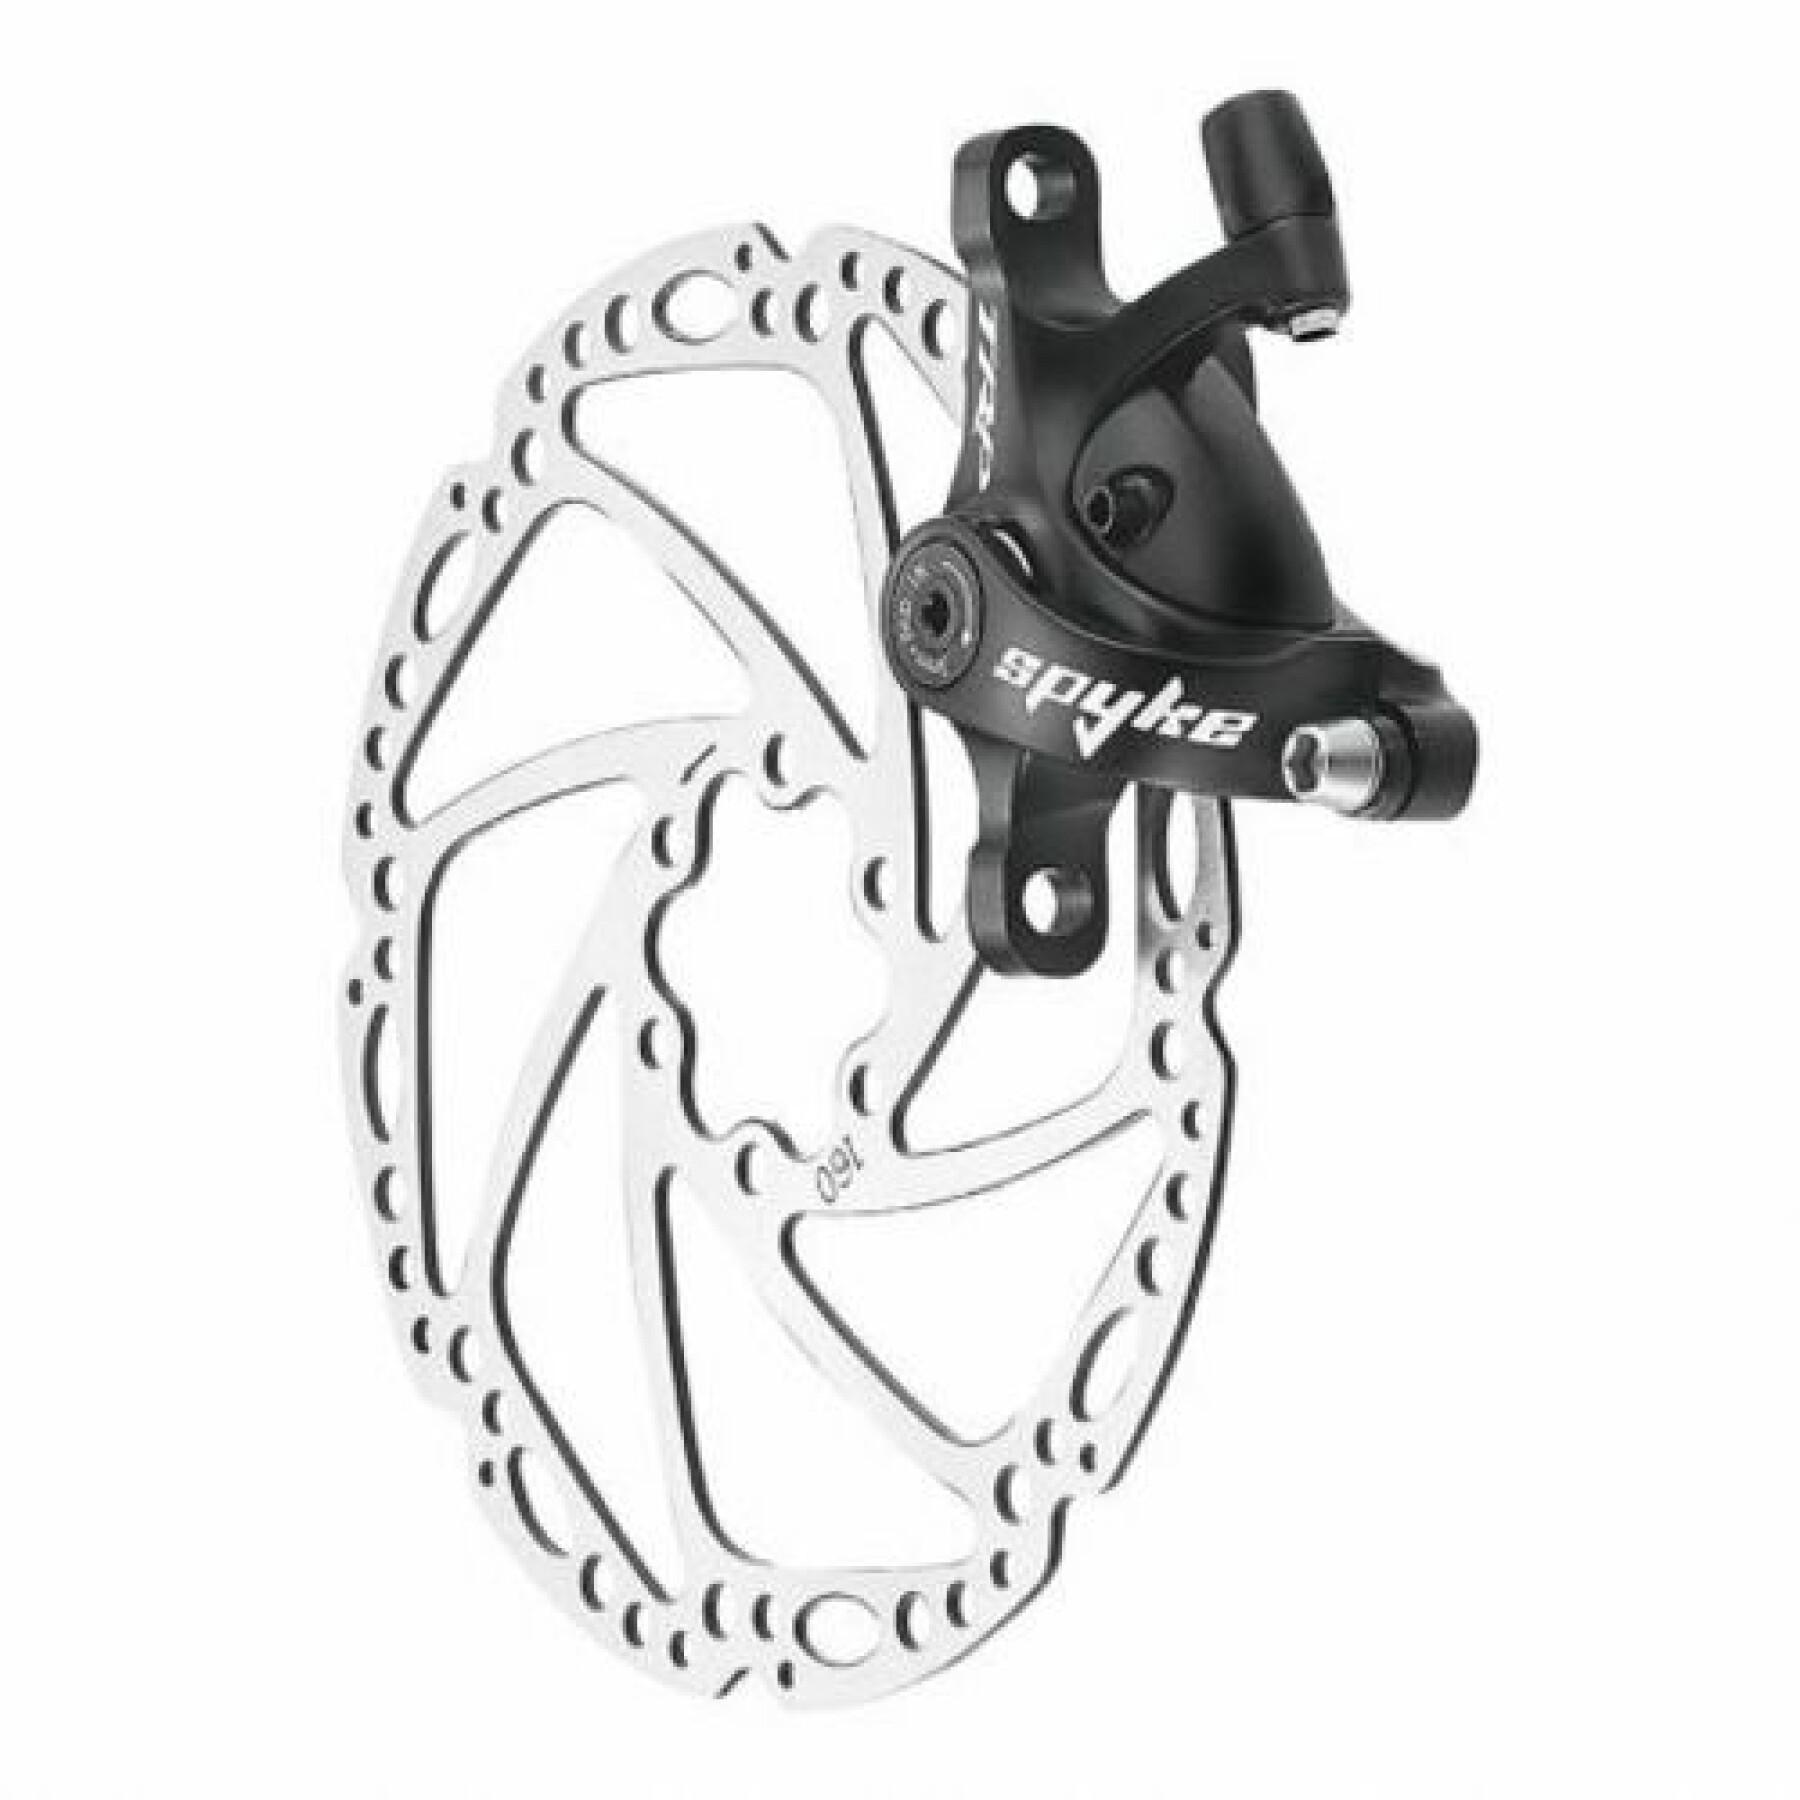 mekaniskt bromsok - endast bromsok för mountainbike TRP